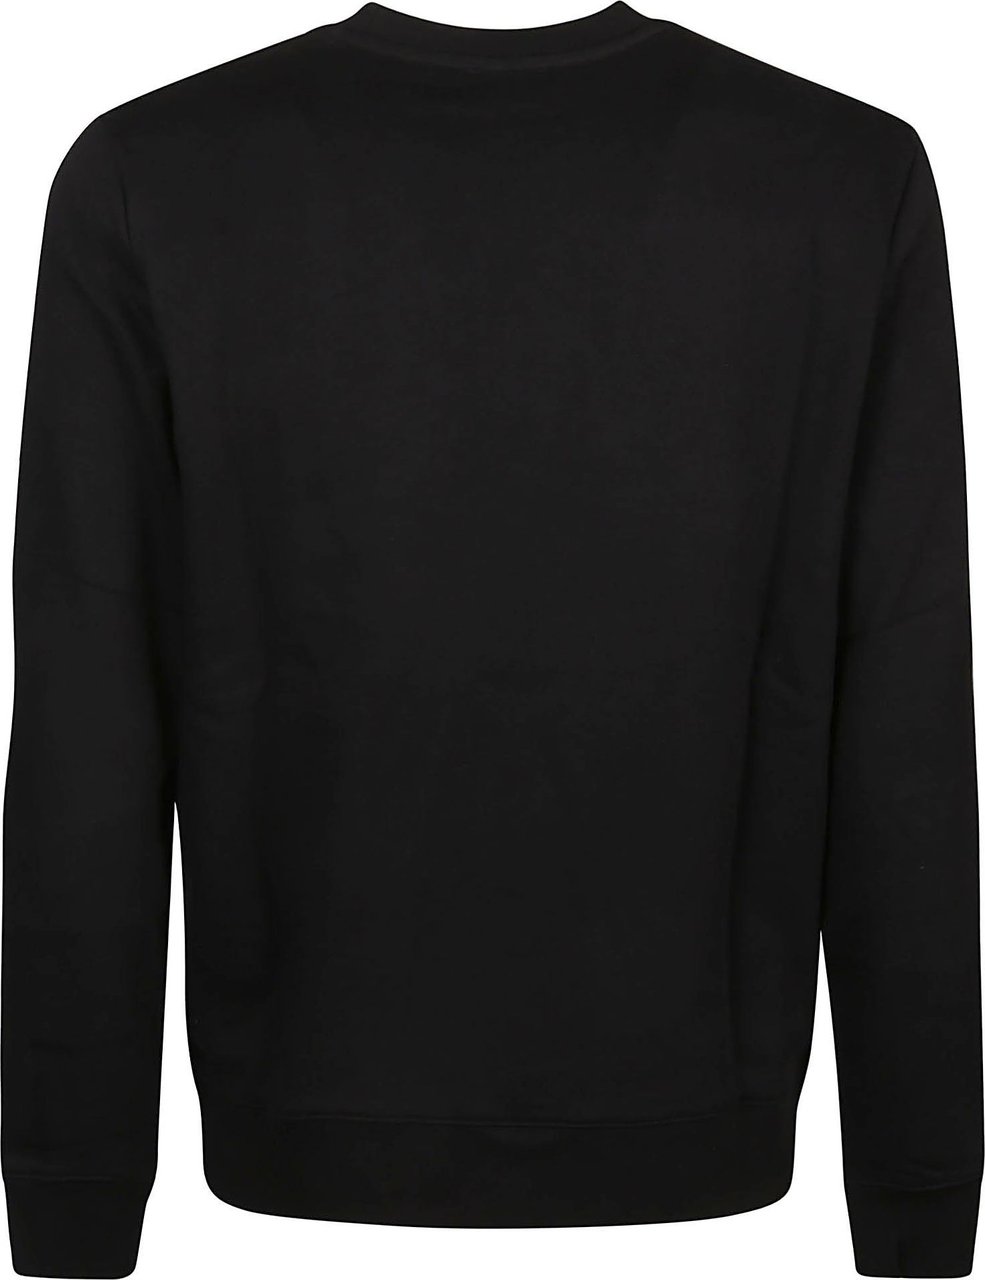 A.P.C. Vpc Sweatshirt Black Zwart